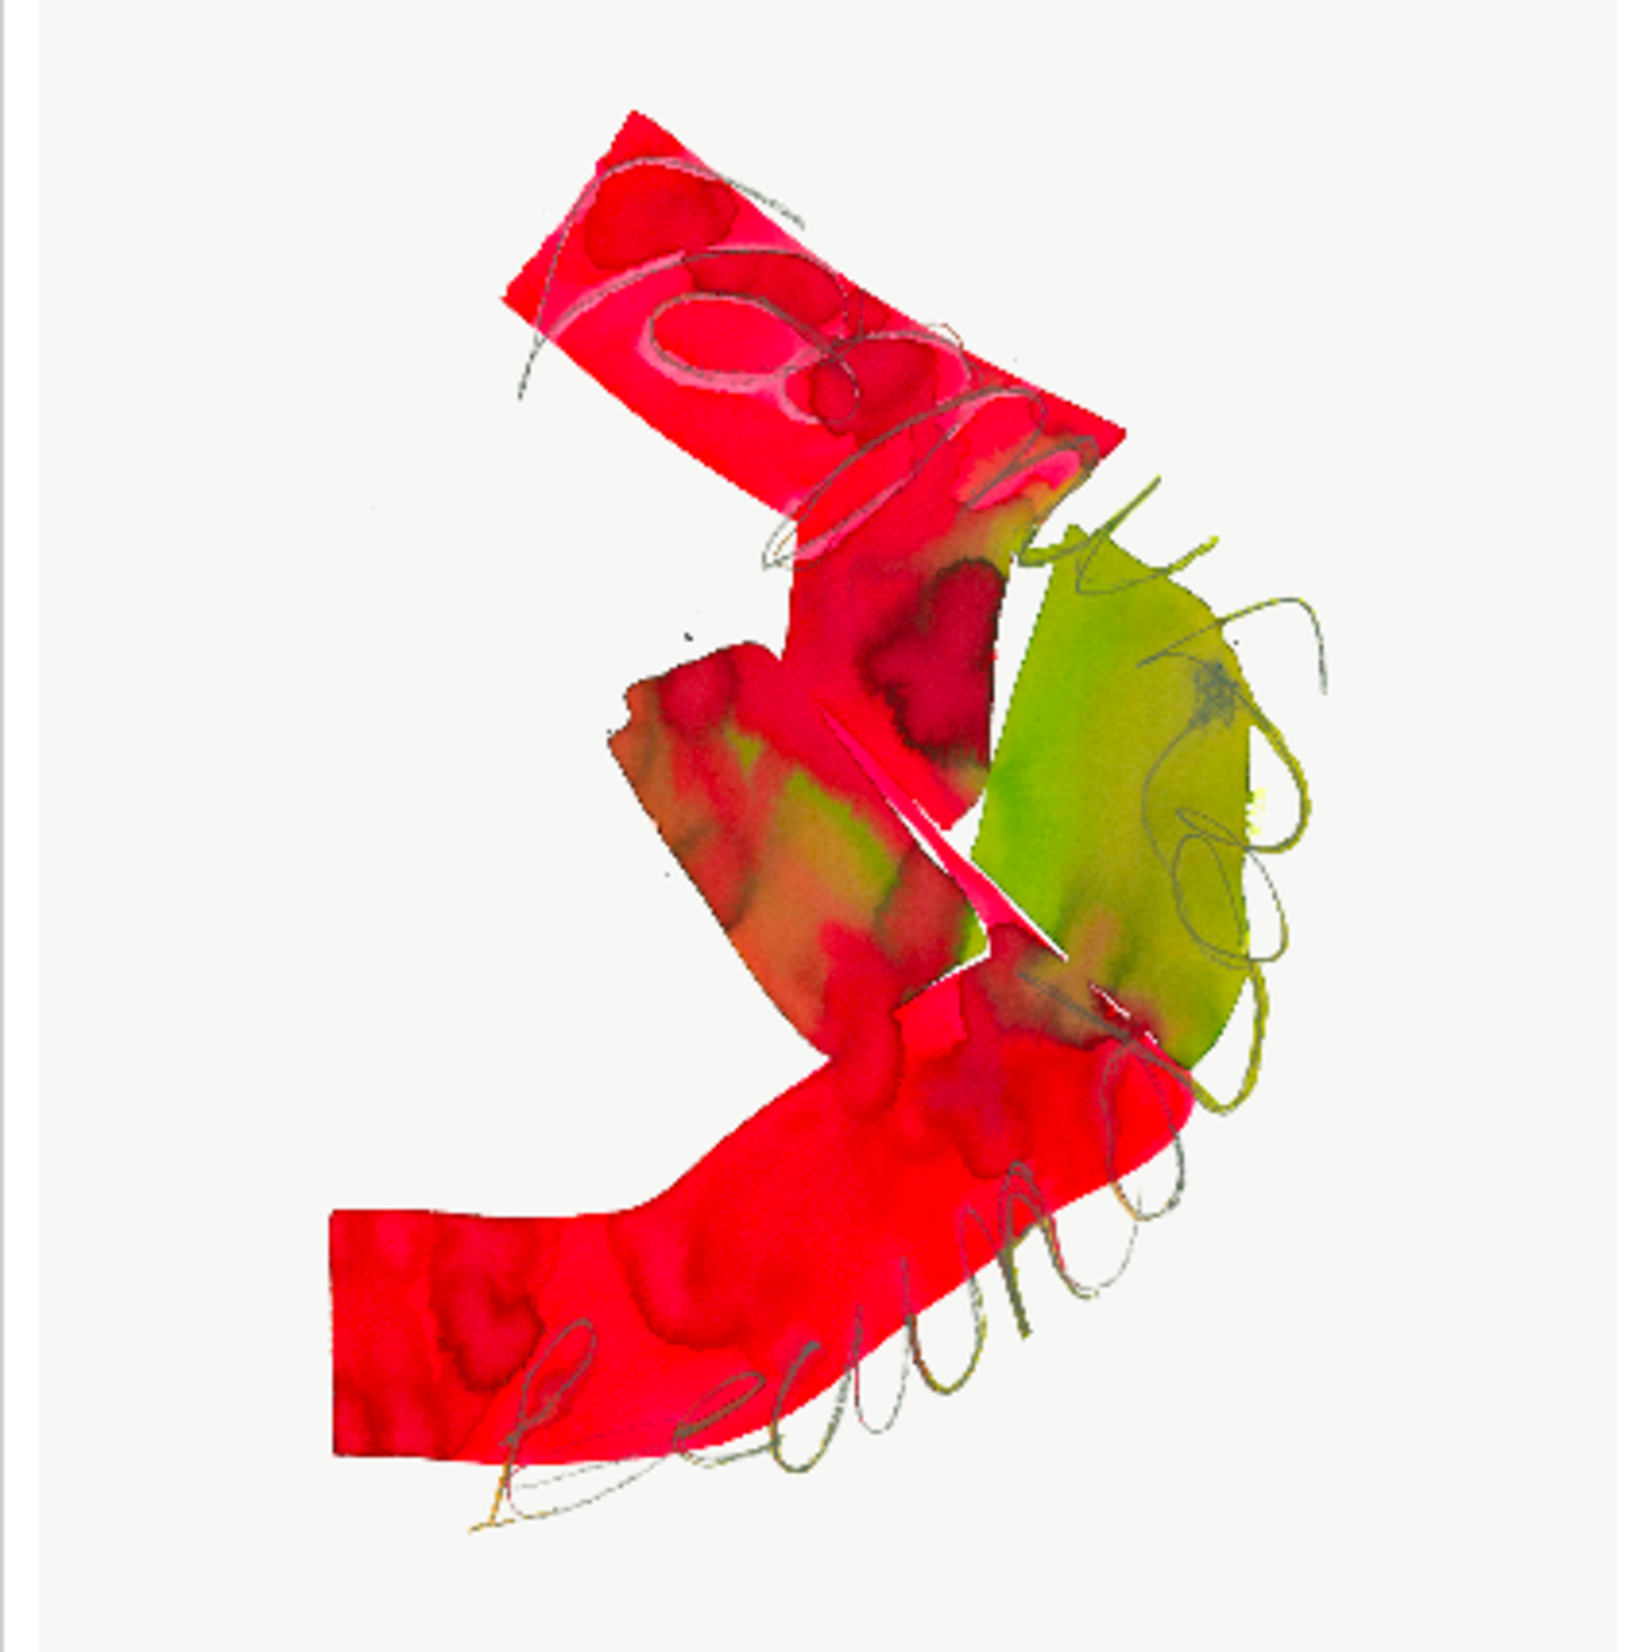 Framed Print on Rag Paper: Color Study 22 By Encarnacion Portal Rubio